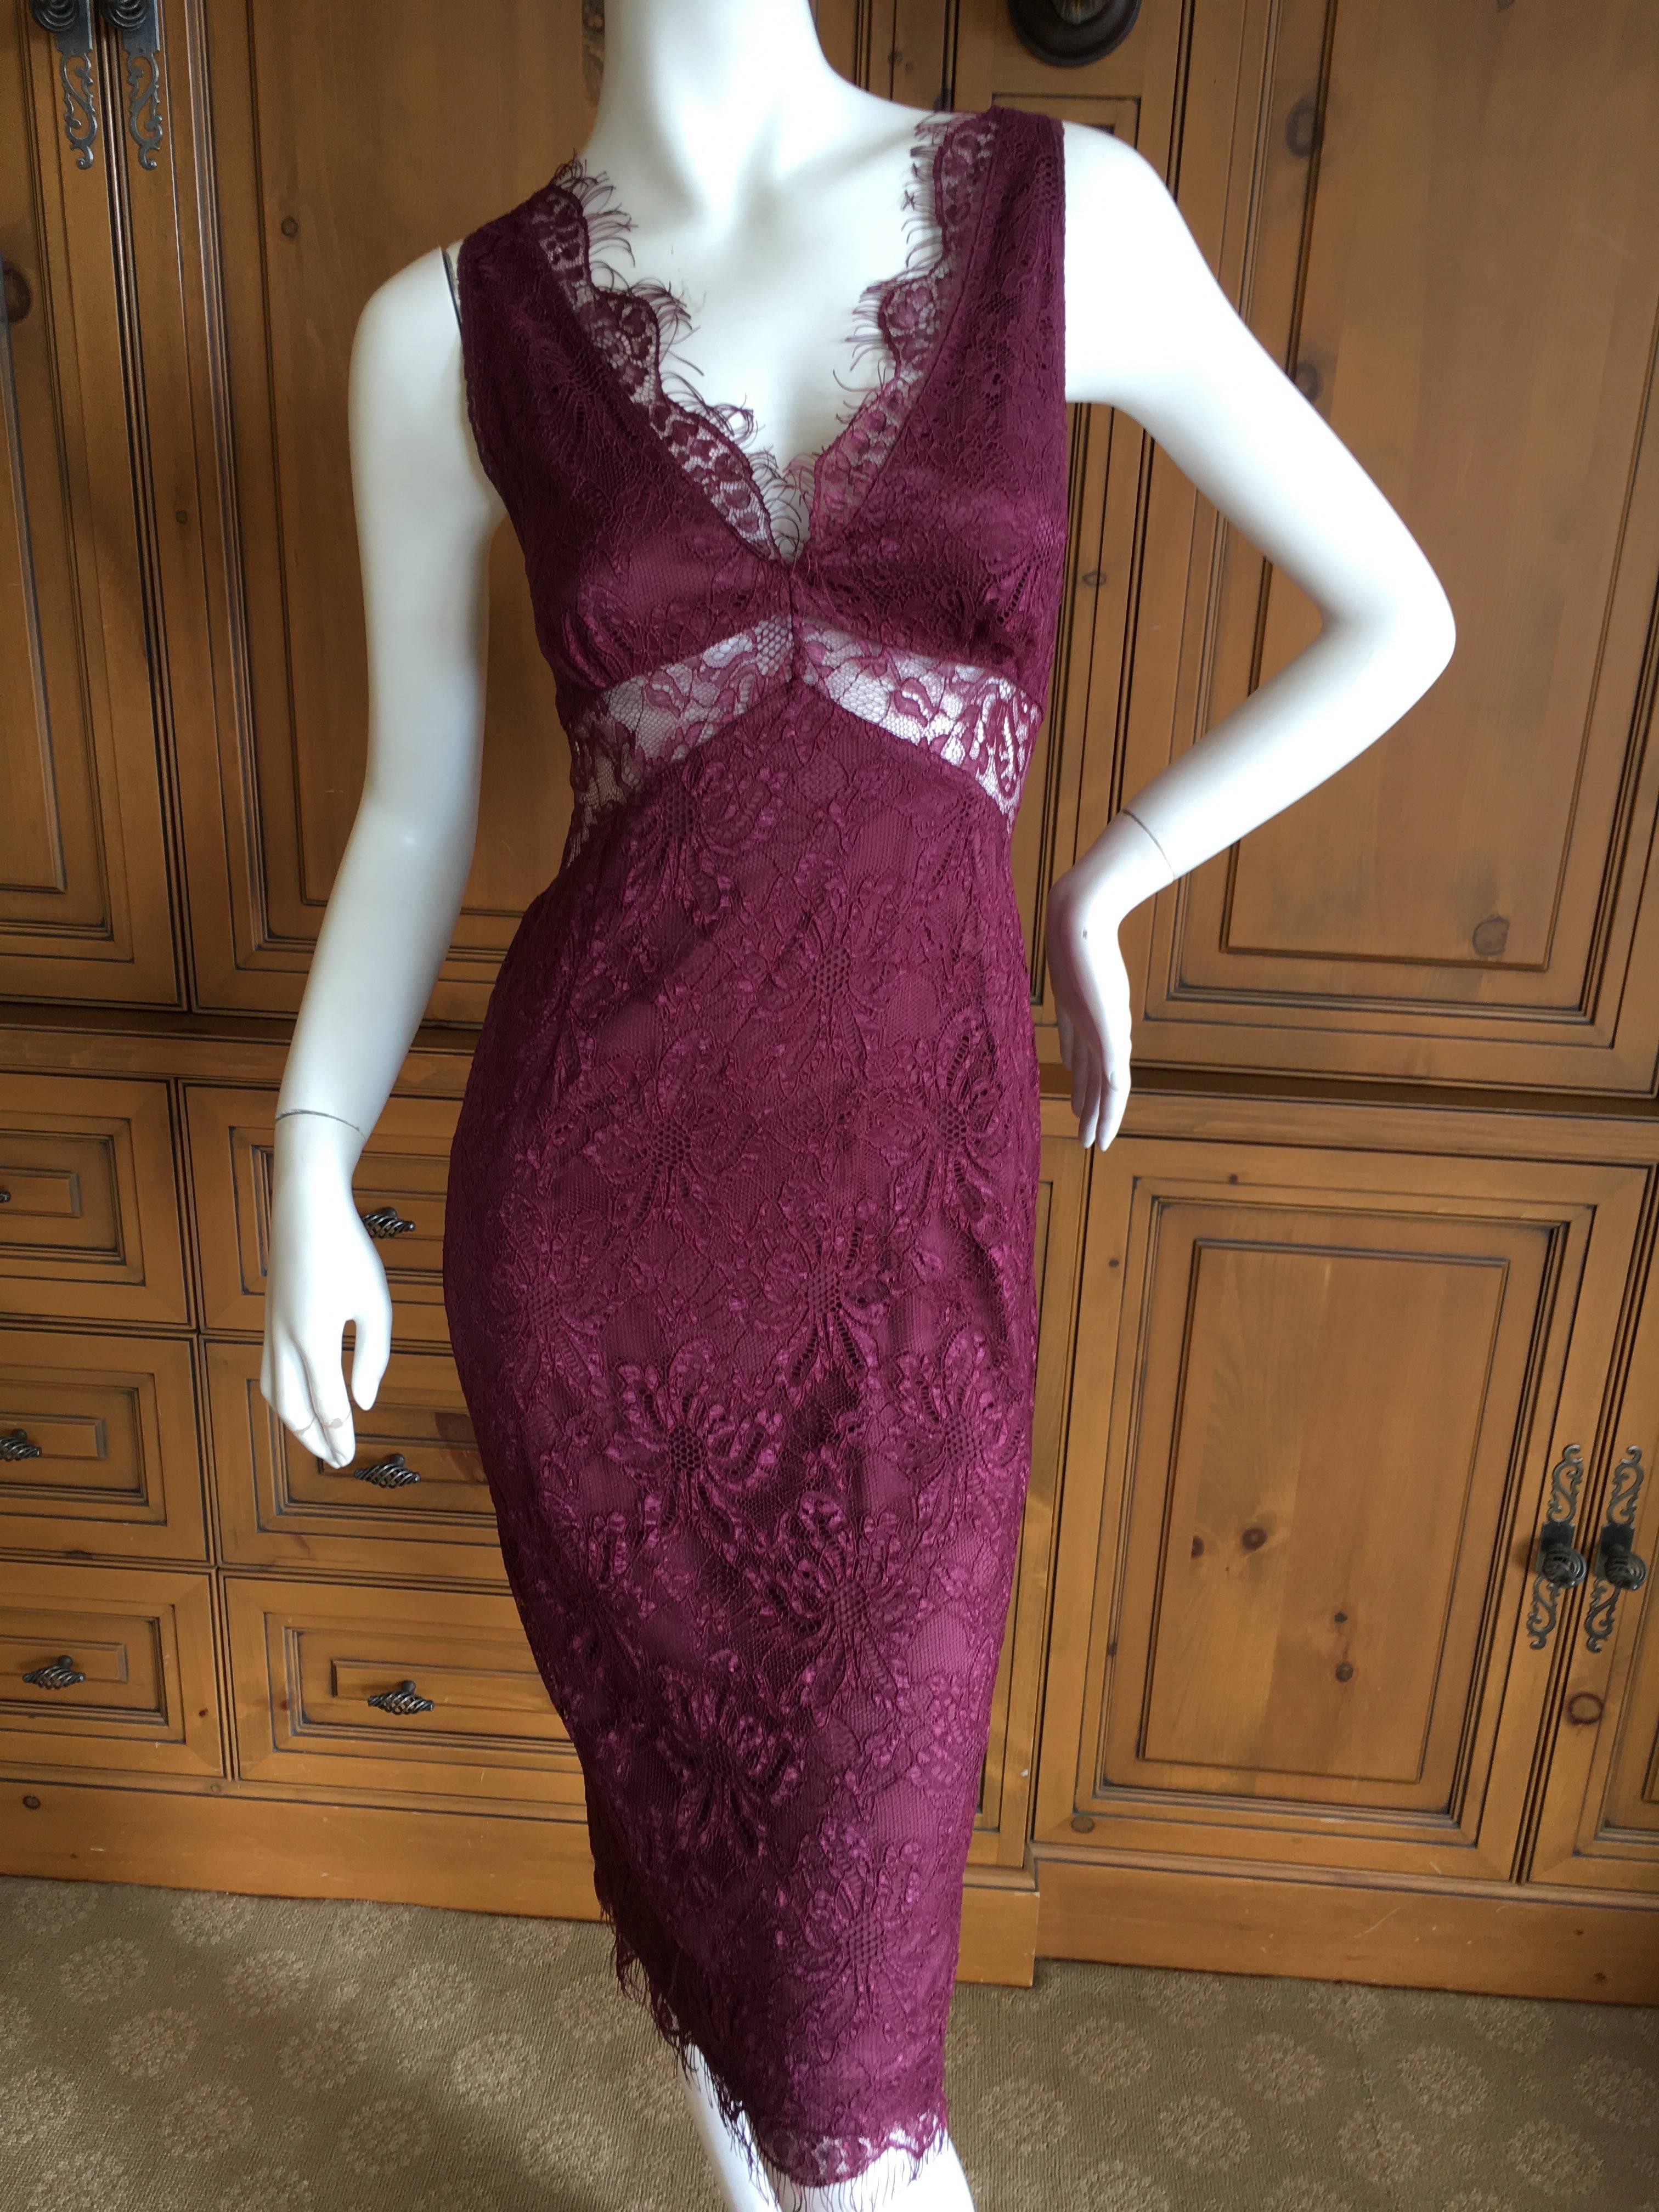  D&G Dolce & Gabbana Vintage Lace Overlay Sheer Cocktail Dress For Sale 2